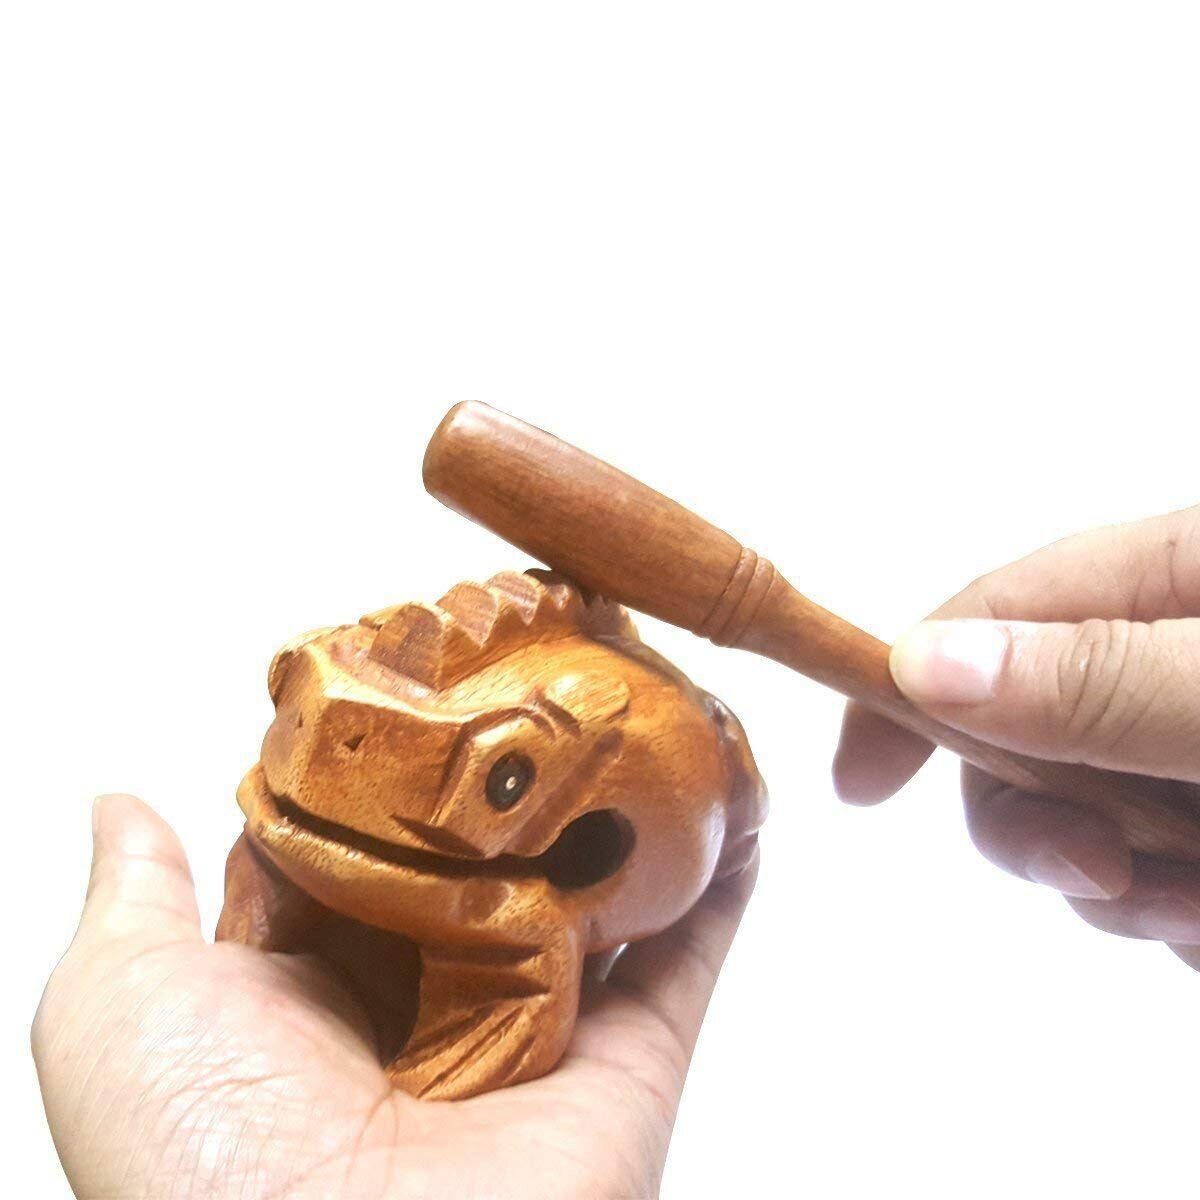 Medium 4 inch Wood Frog Guiro Rasp - Musical Instrument Tone Block